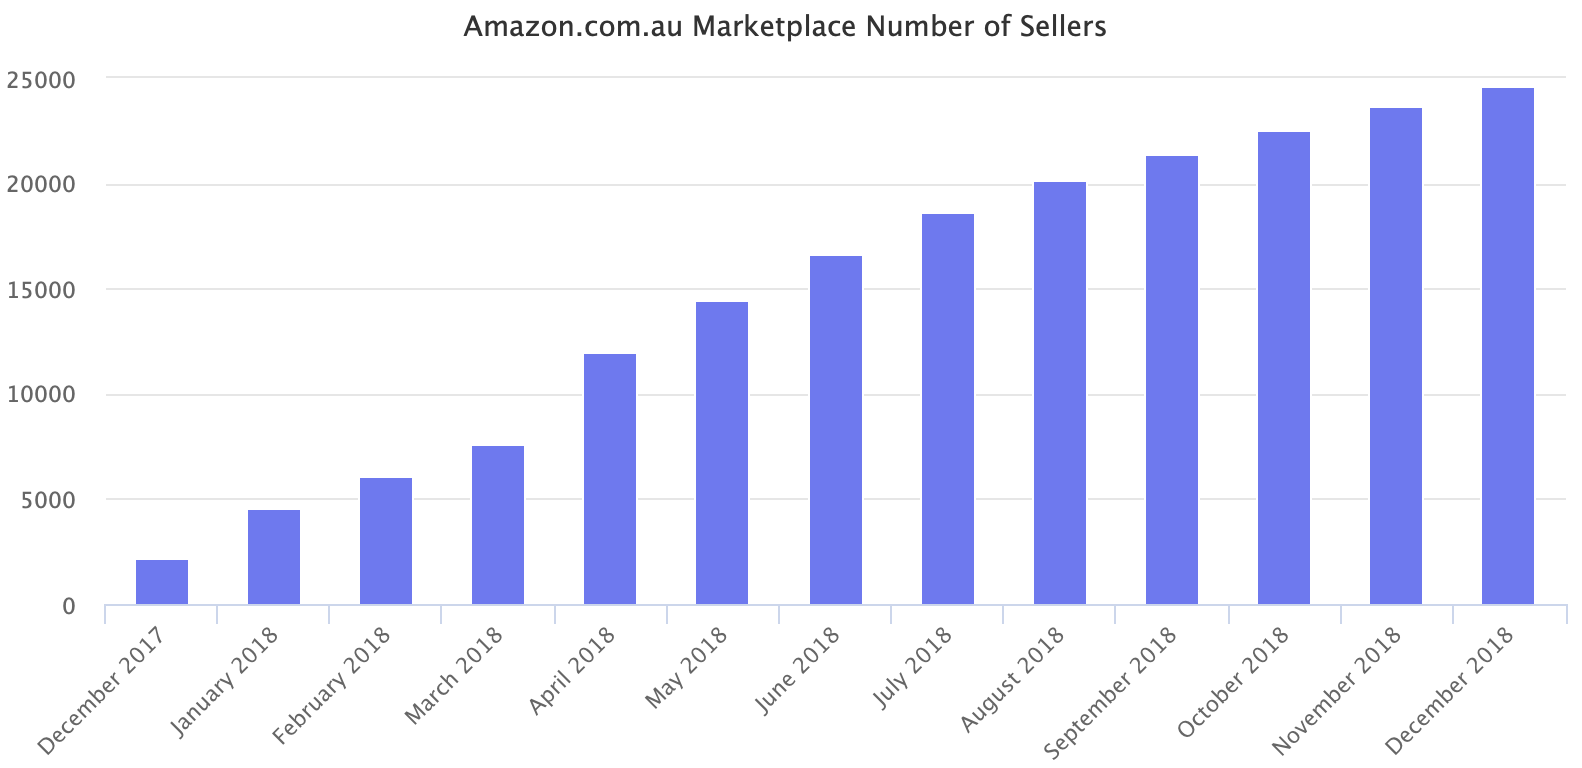 Amazon.com.au Marketplace Number of Sellers